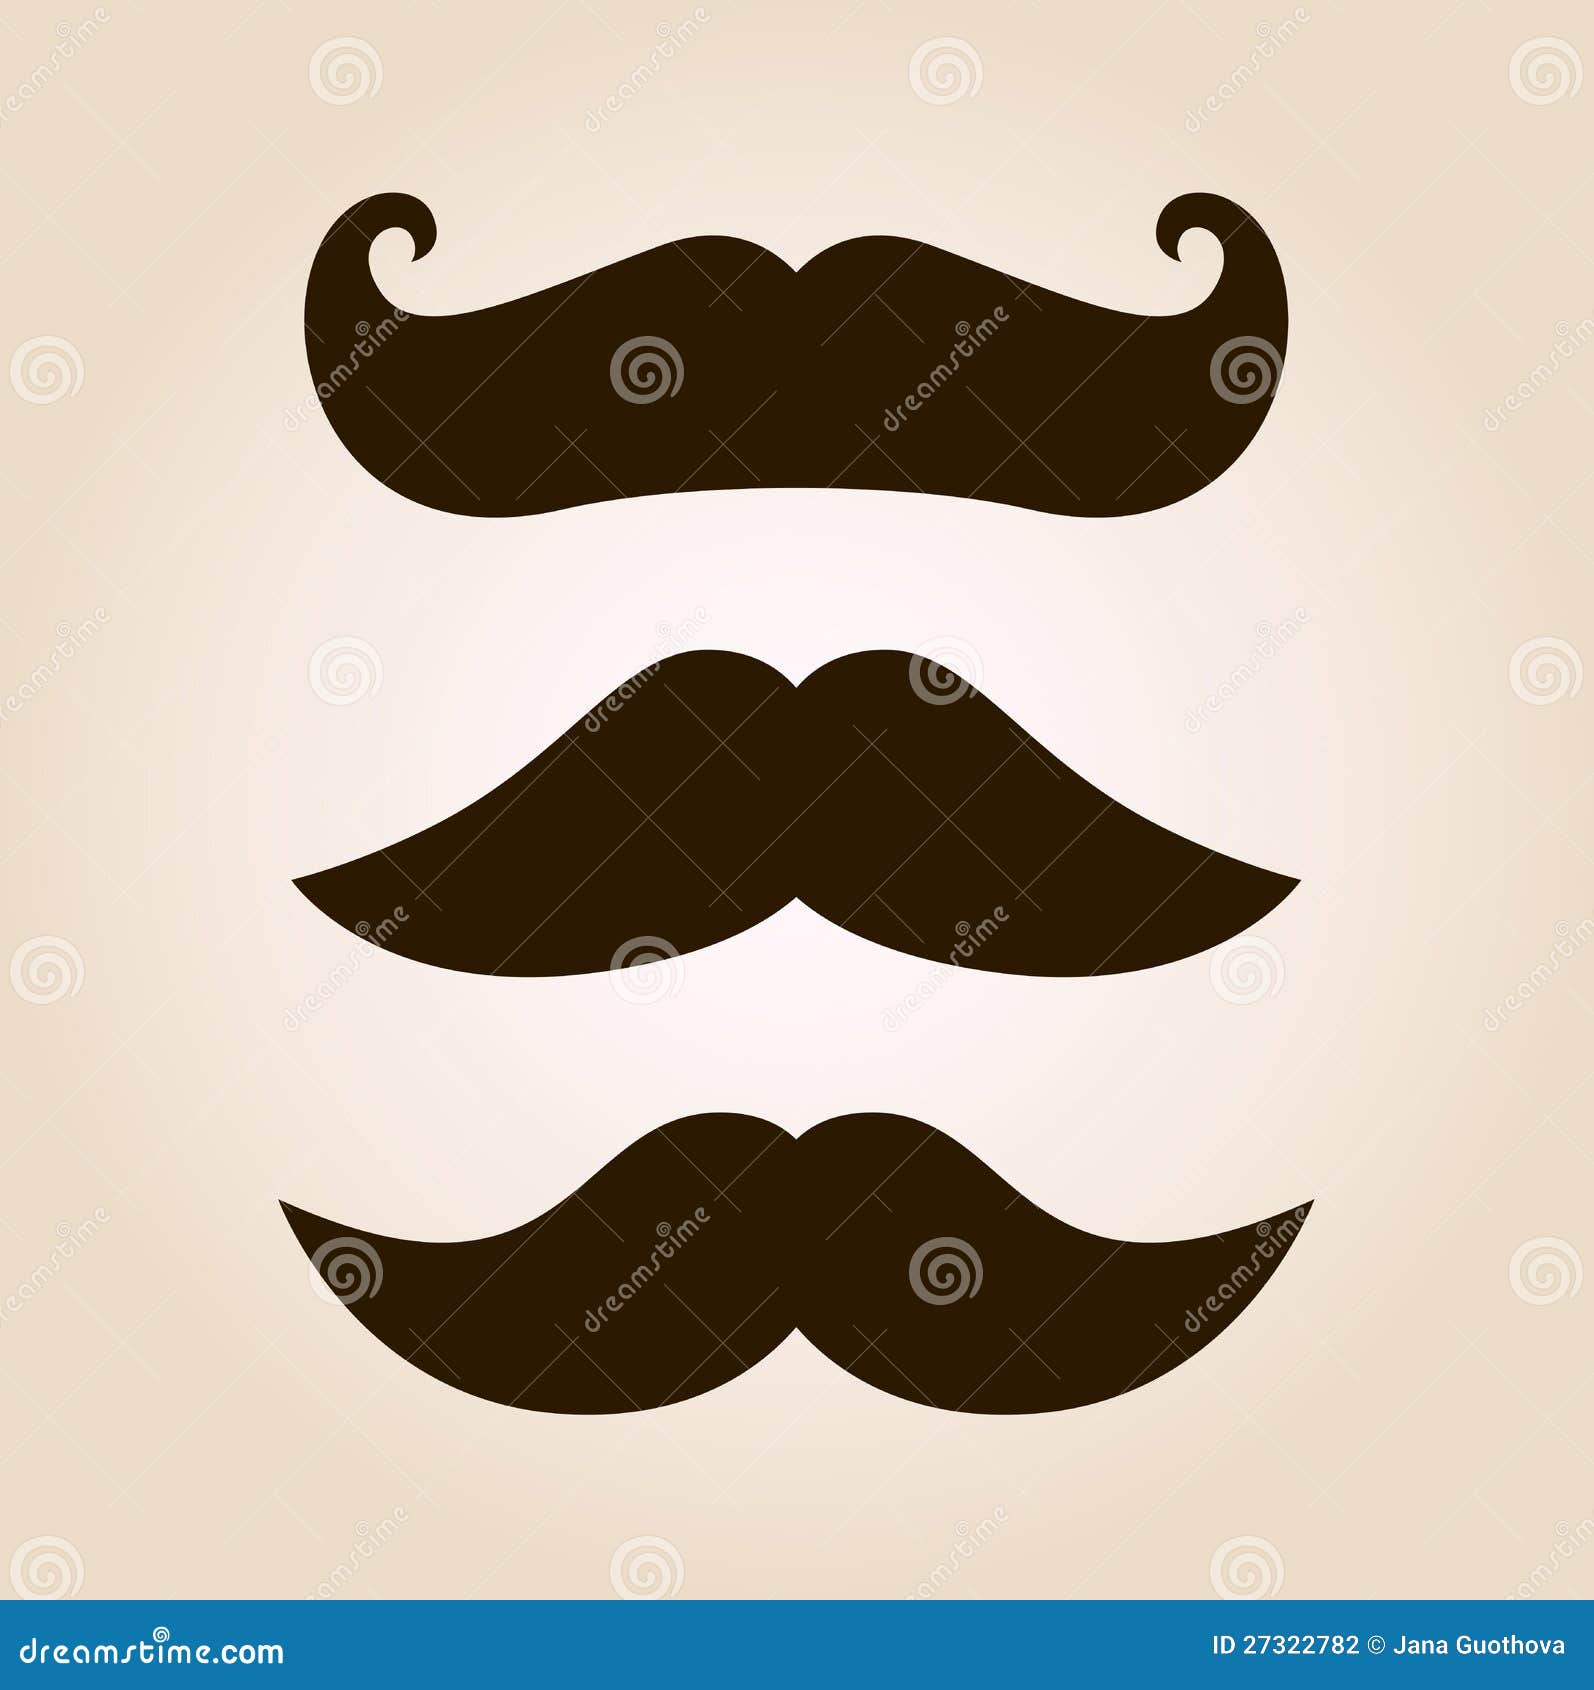 Retro Mustache Illustration Set Stock Photography - Image 